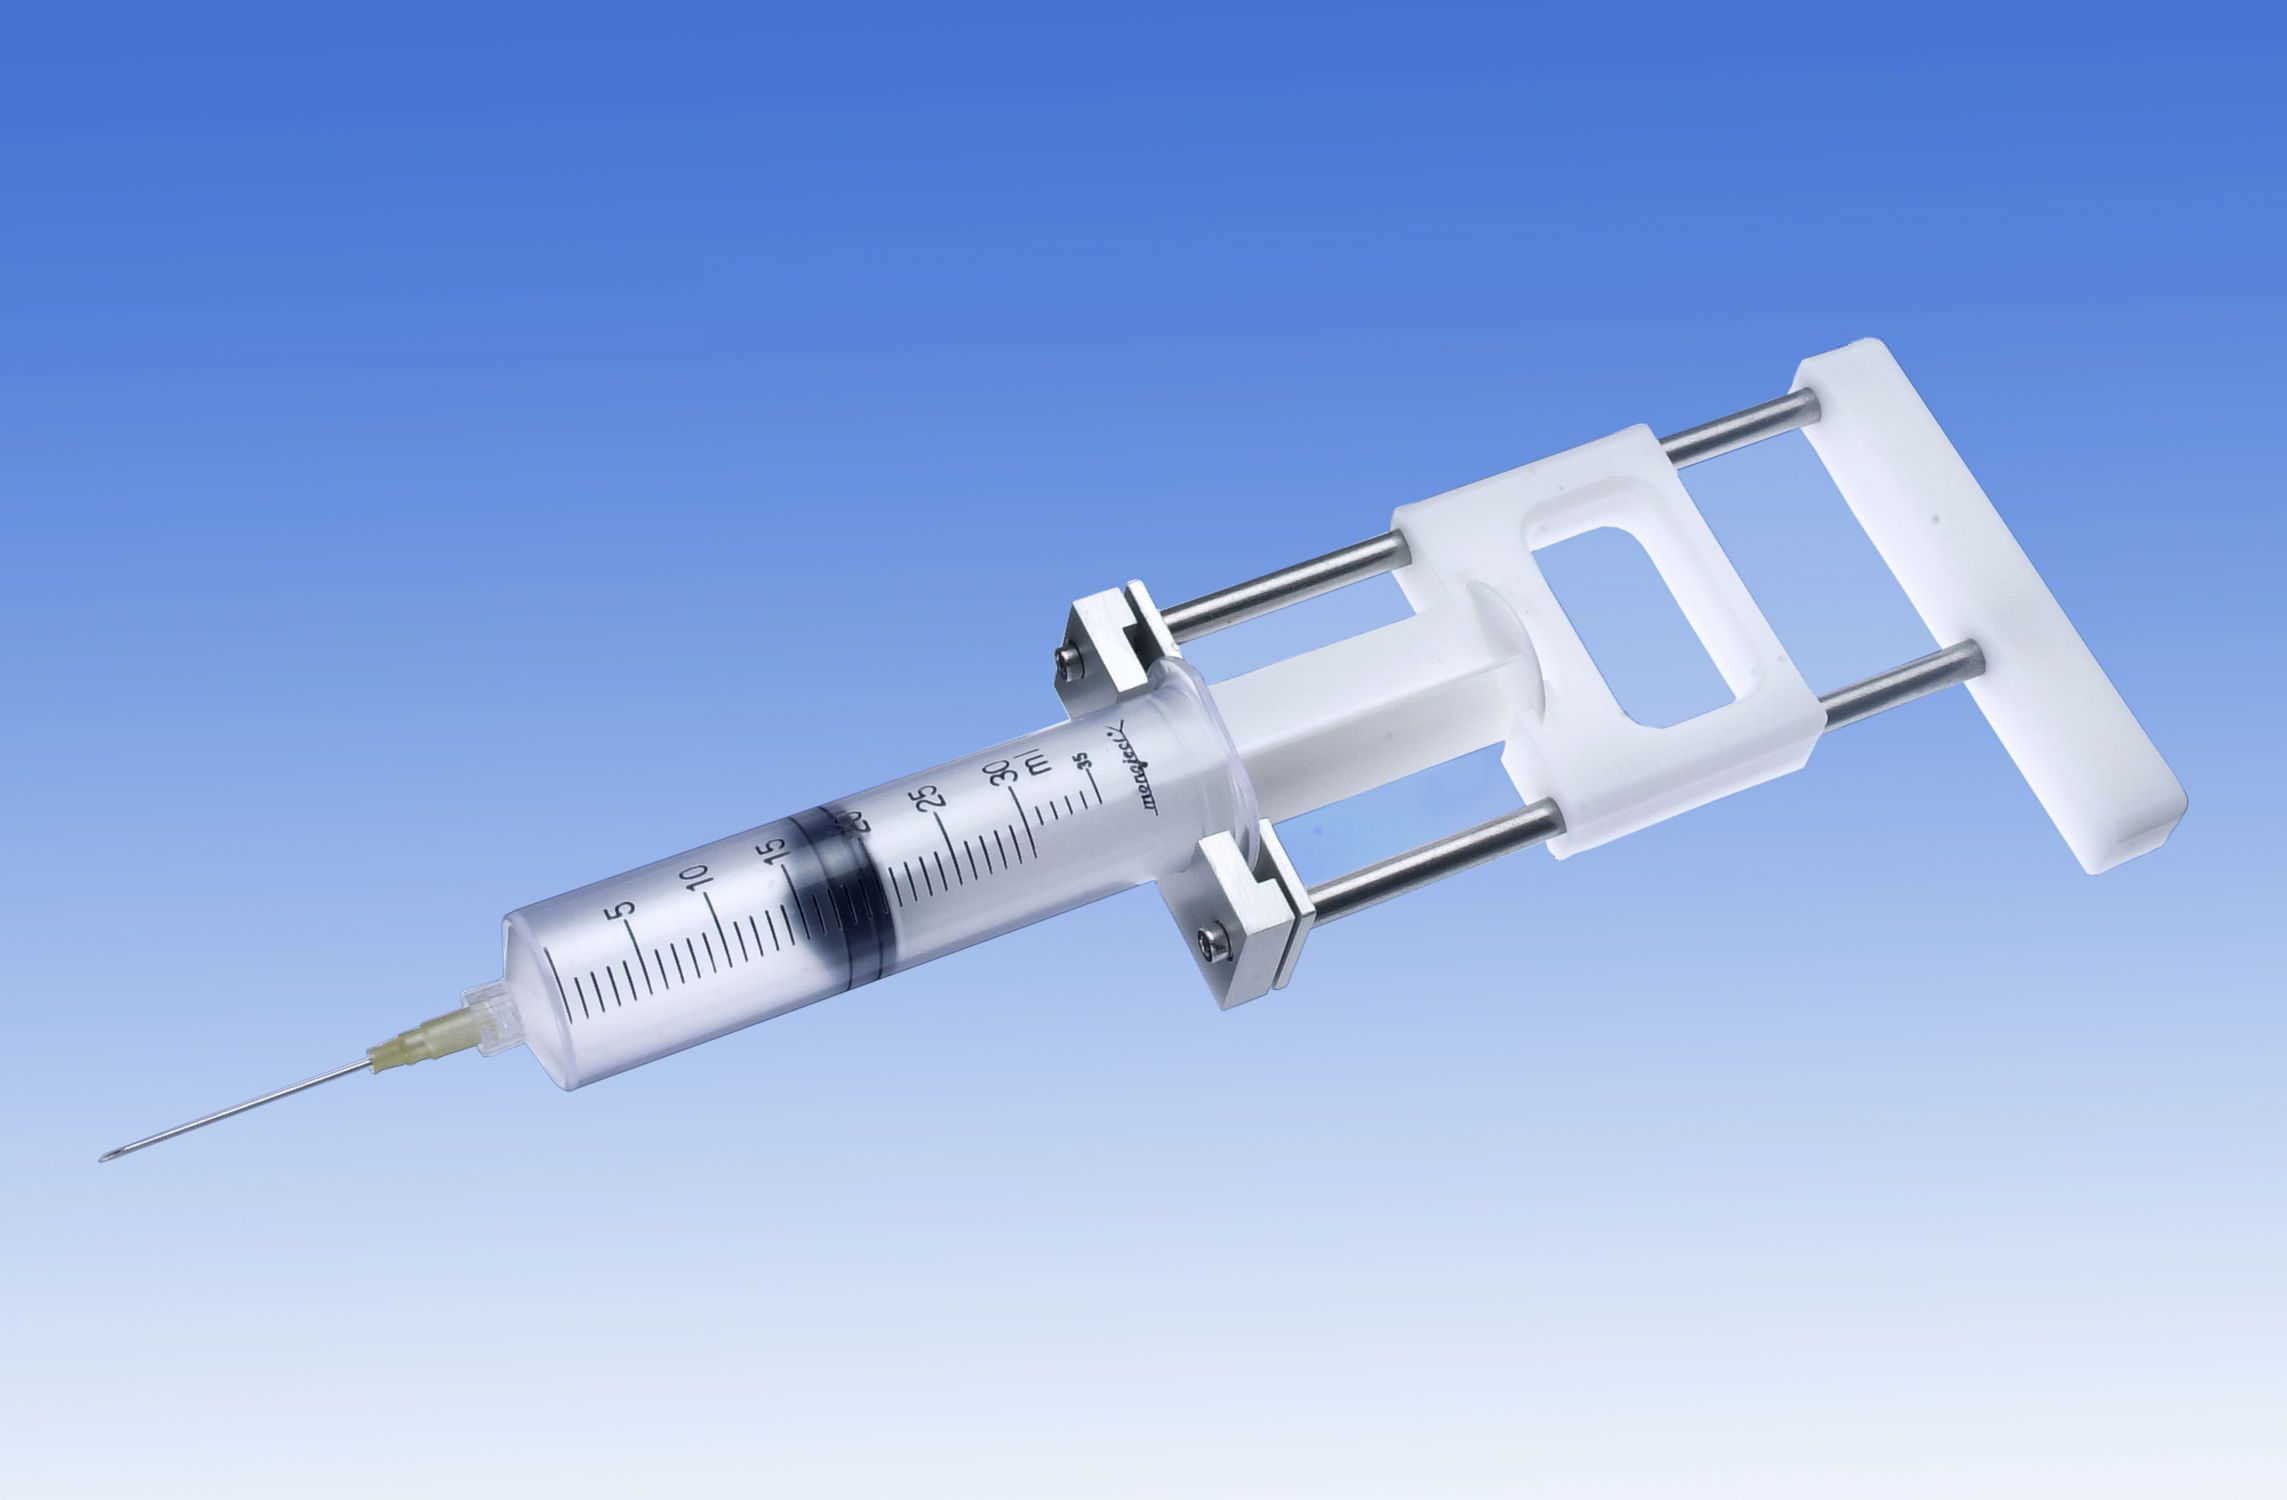 Mature tube needle